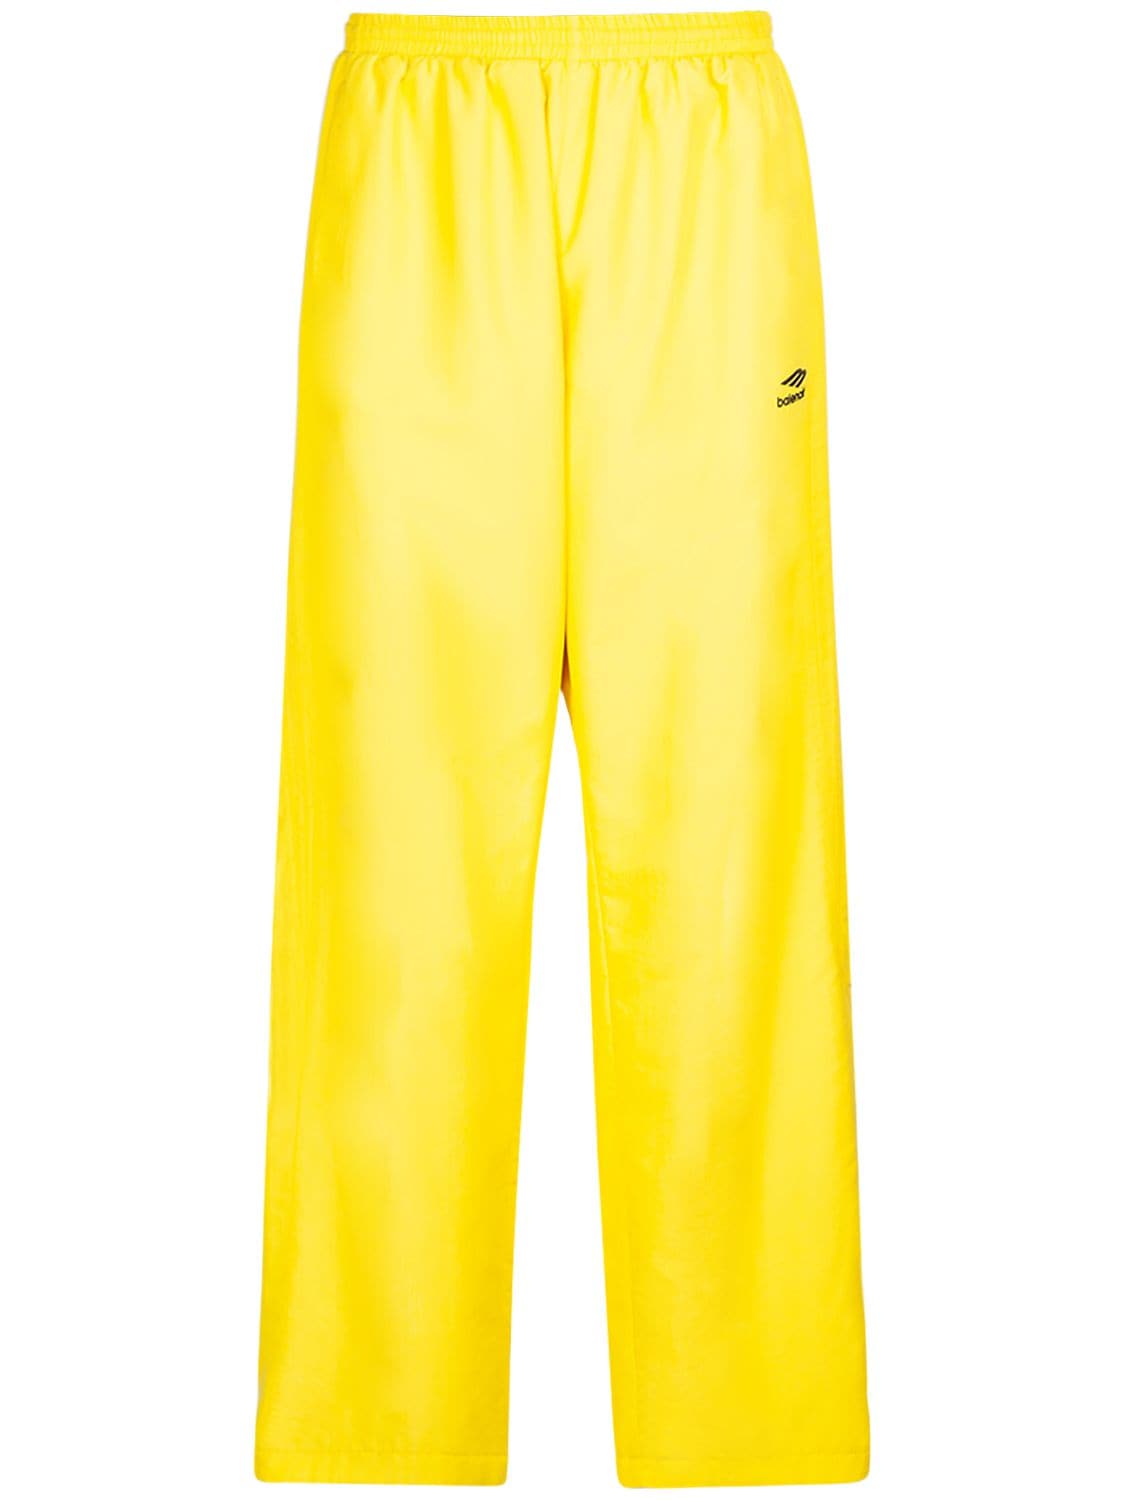 Balenciaga Nylon Pants In Citrus Yellow